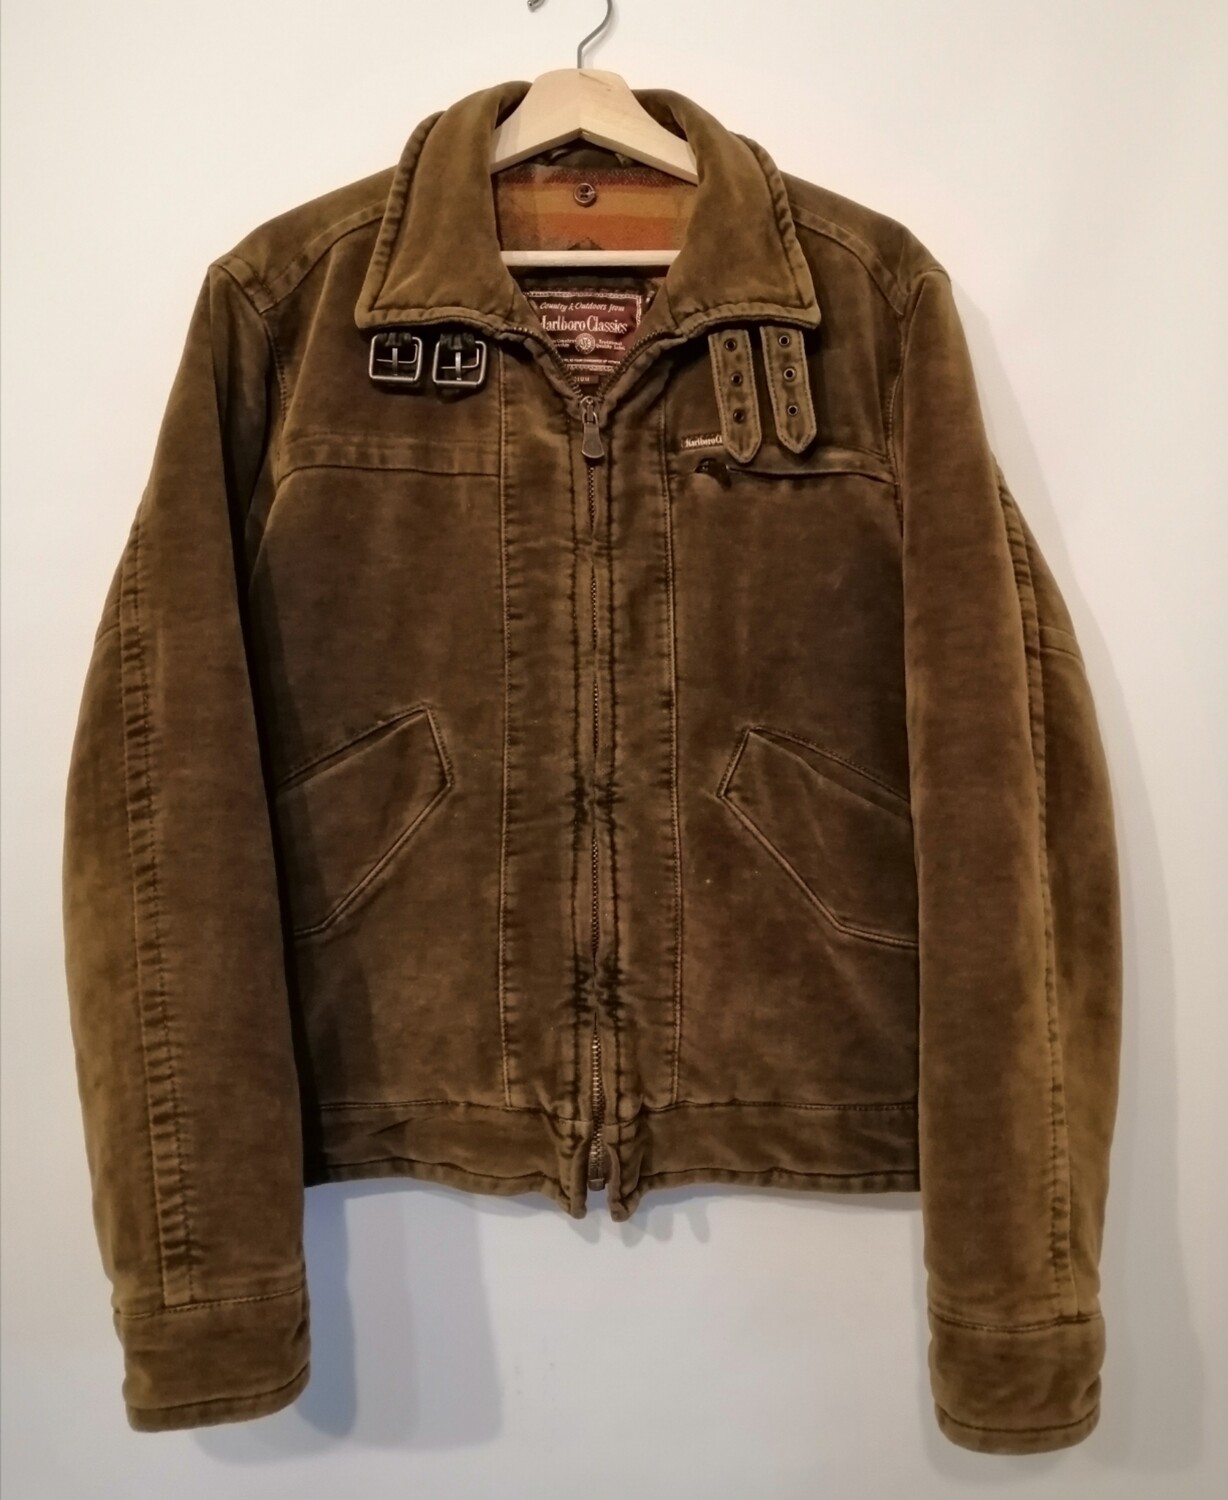 Marlboro Classics vintage cotton jacket size M for men Cafe Racer style